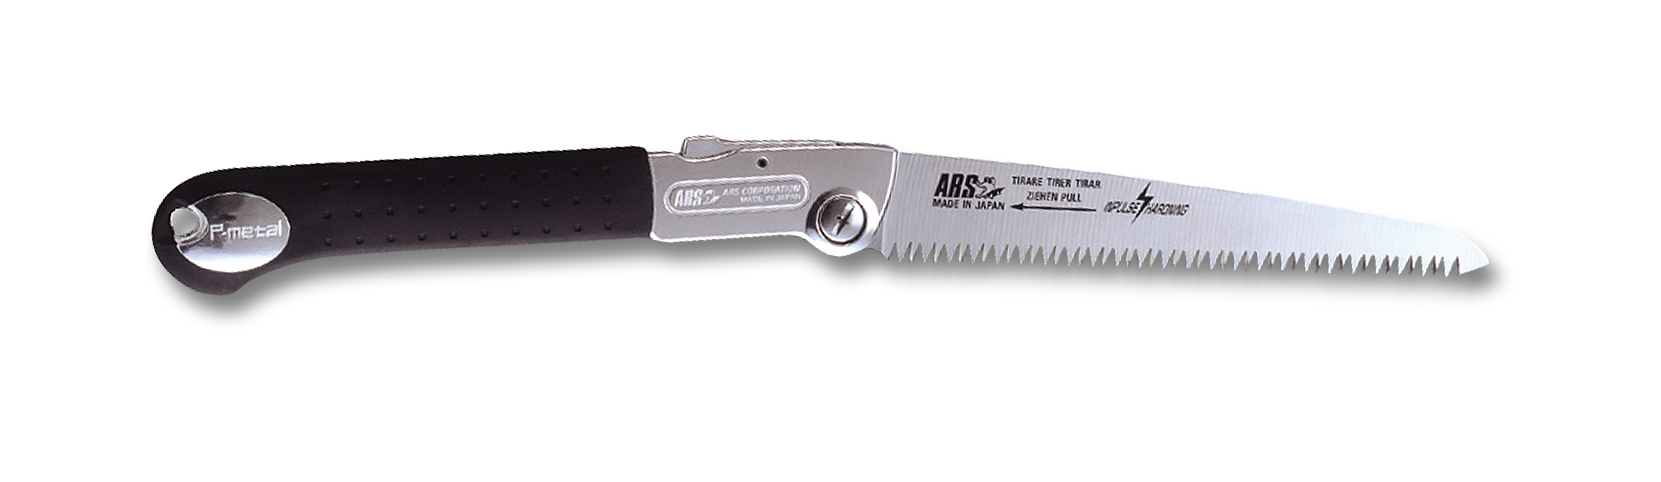 ARS PM Series Professional Folding Saw - SA-PM21L